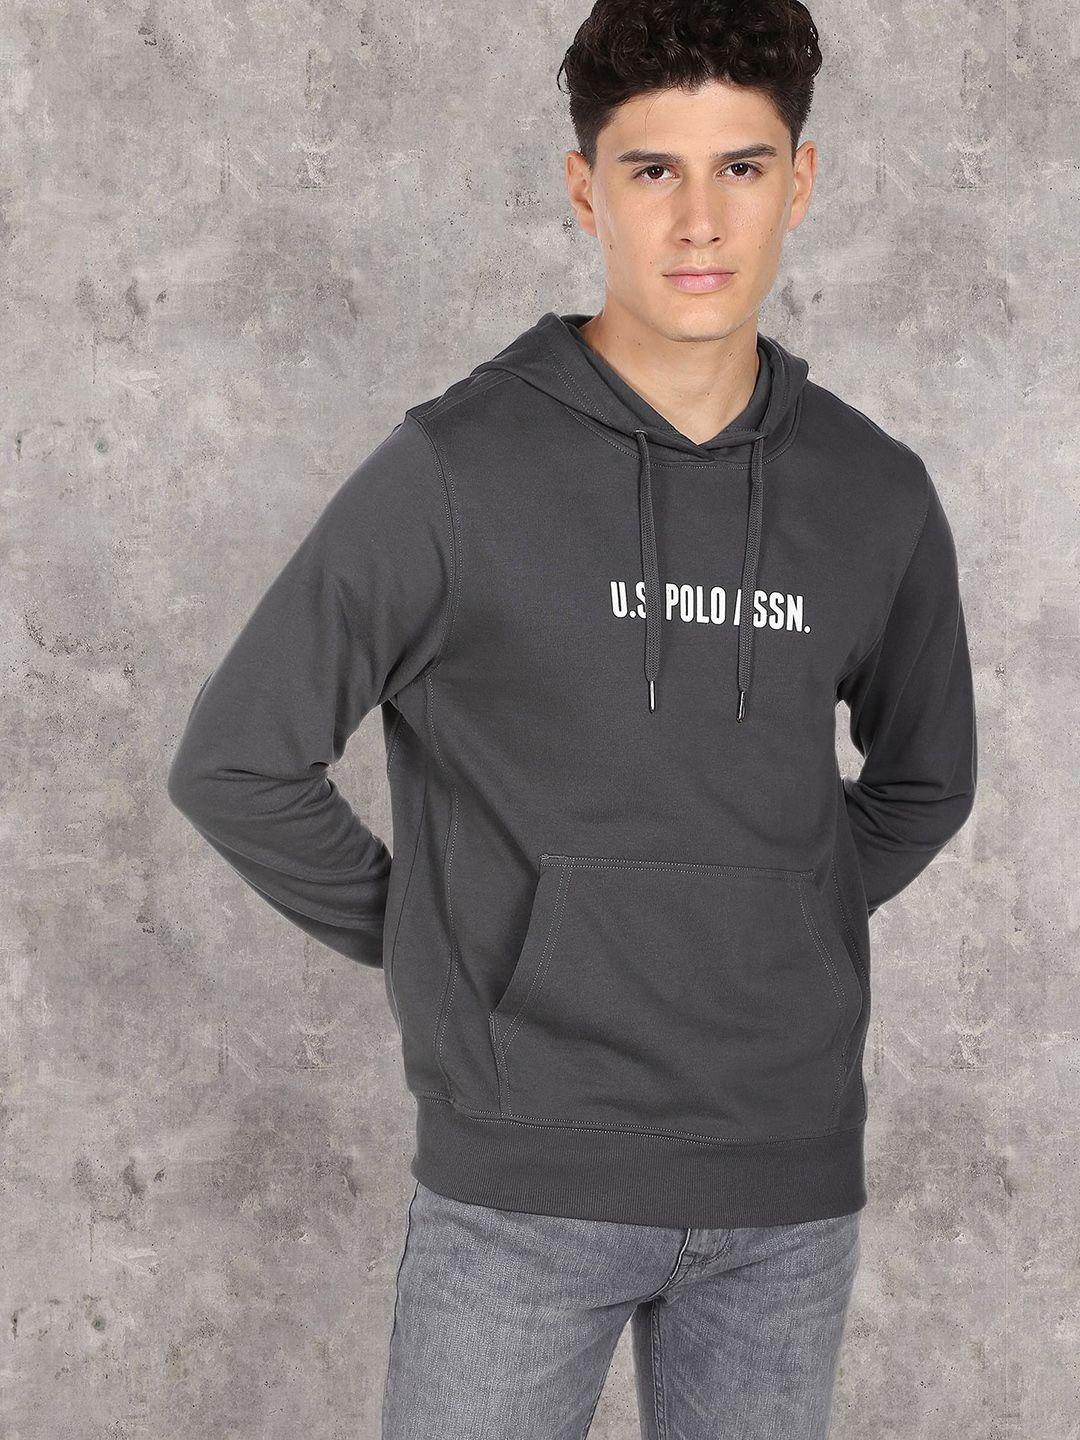 u.s.-polo-assn.-denim-co.-men-black-printed-hooded-pure-cotton-sweatshirt